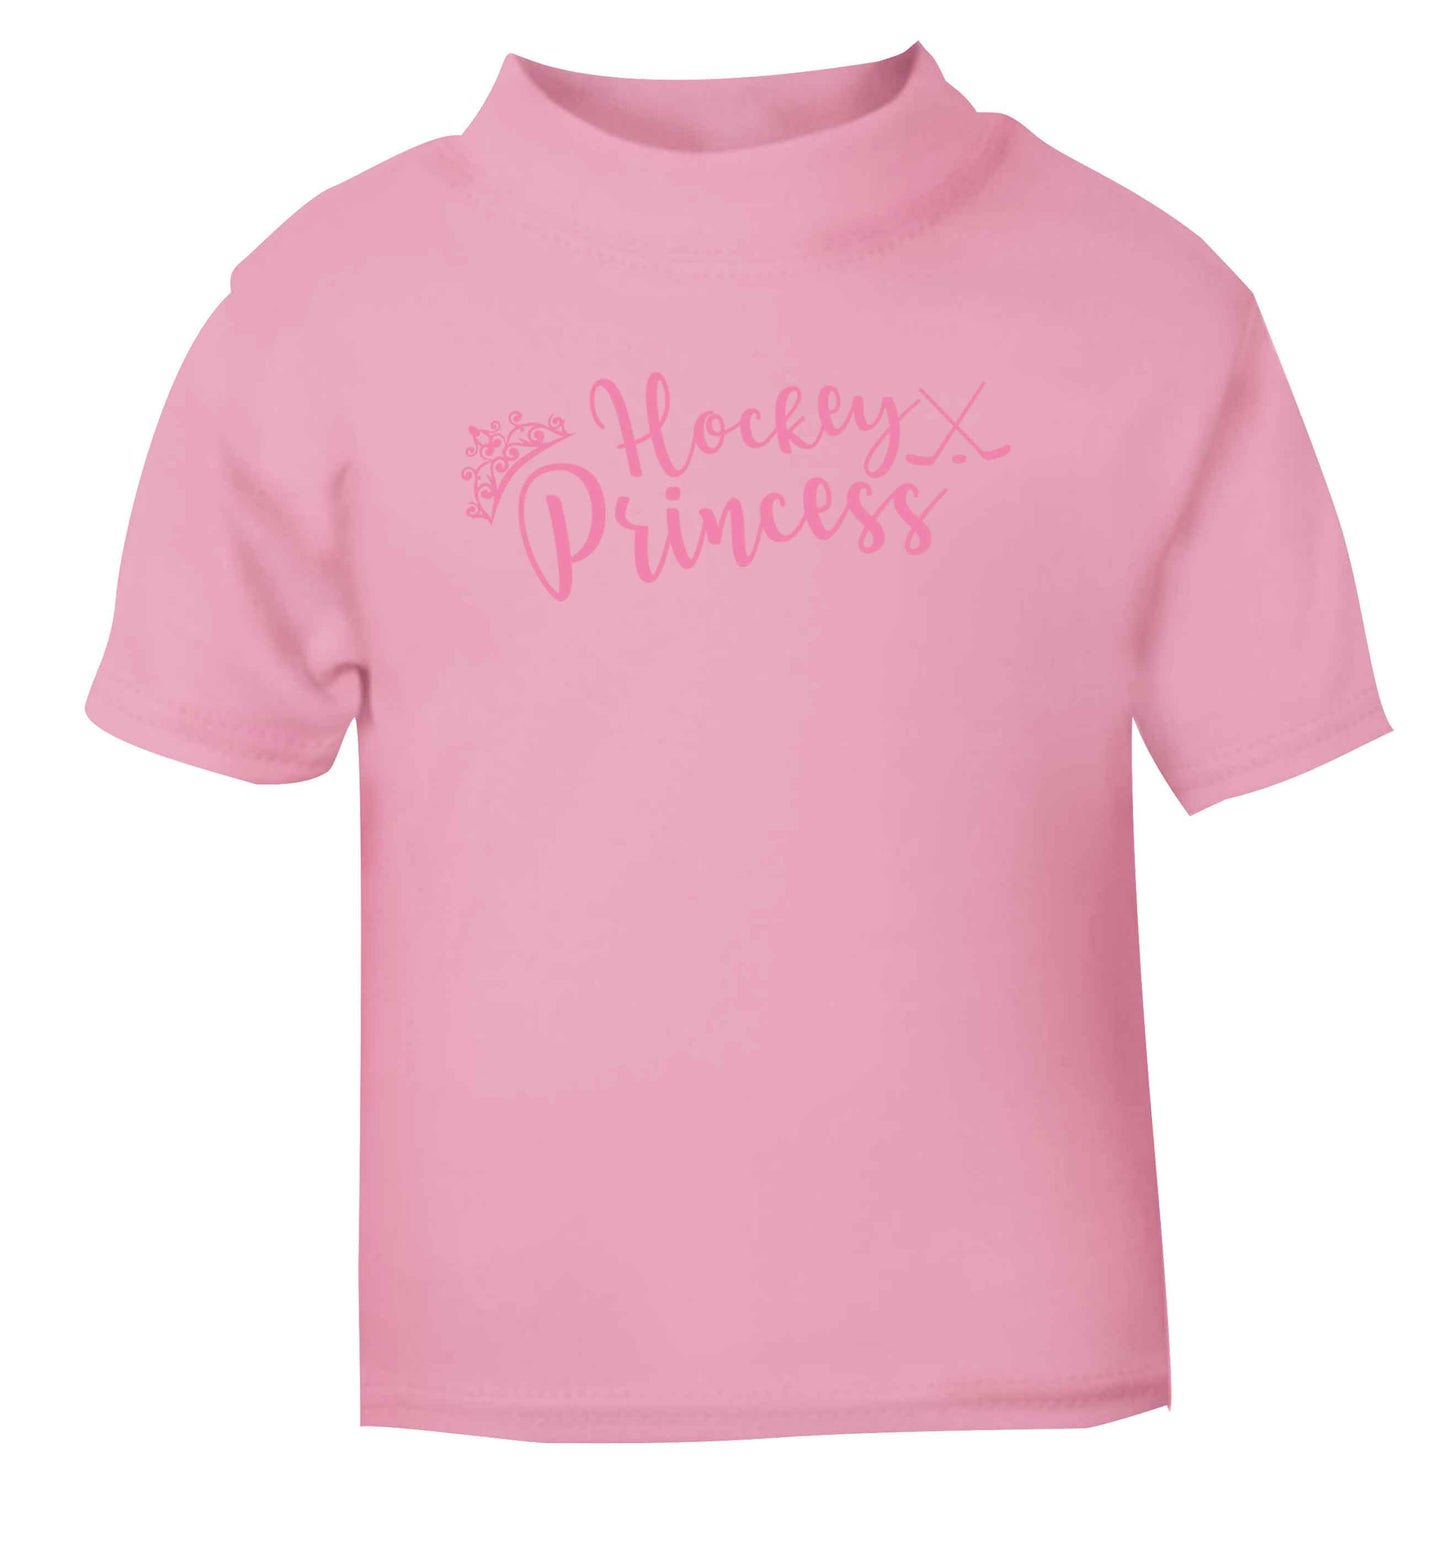 Hockey princess light pink Baby Toddler Tshirt 2 Years